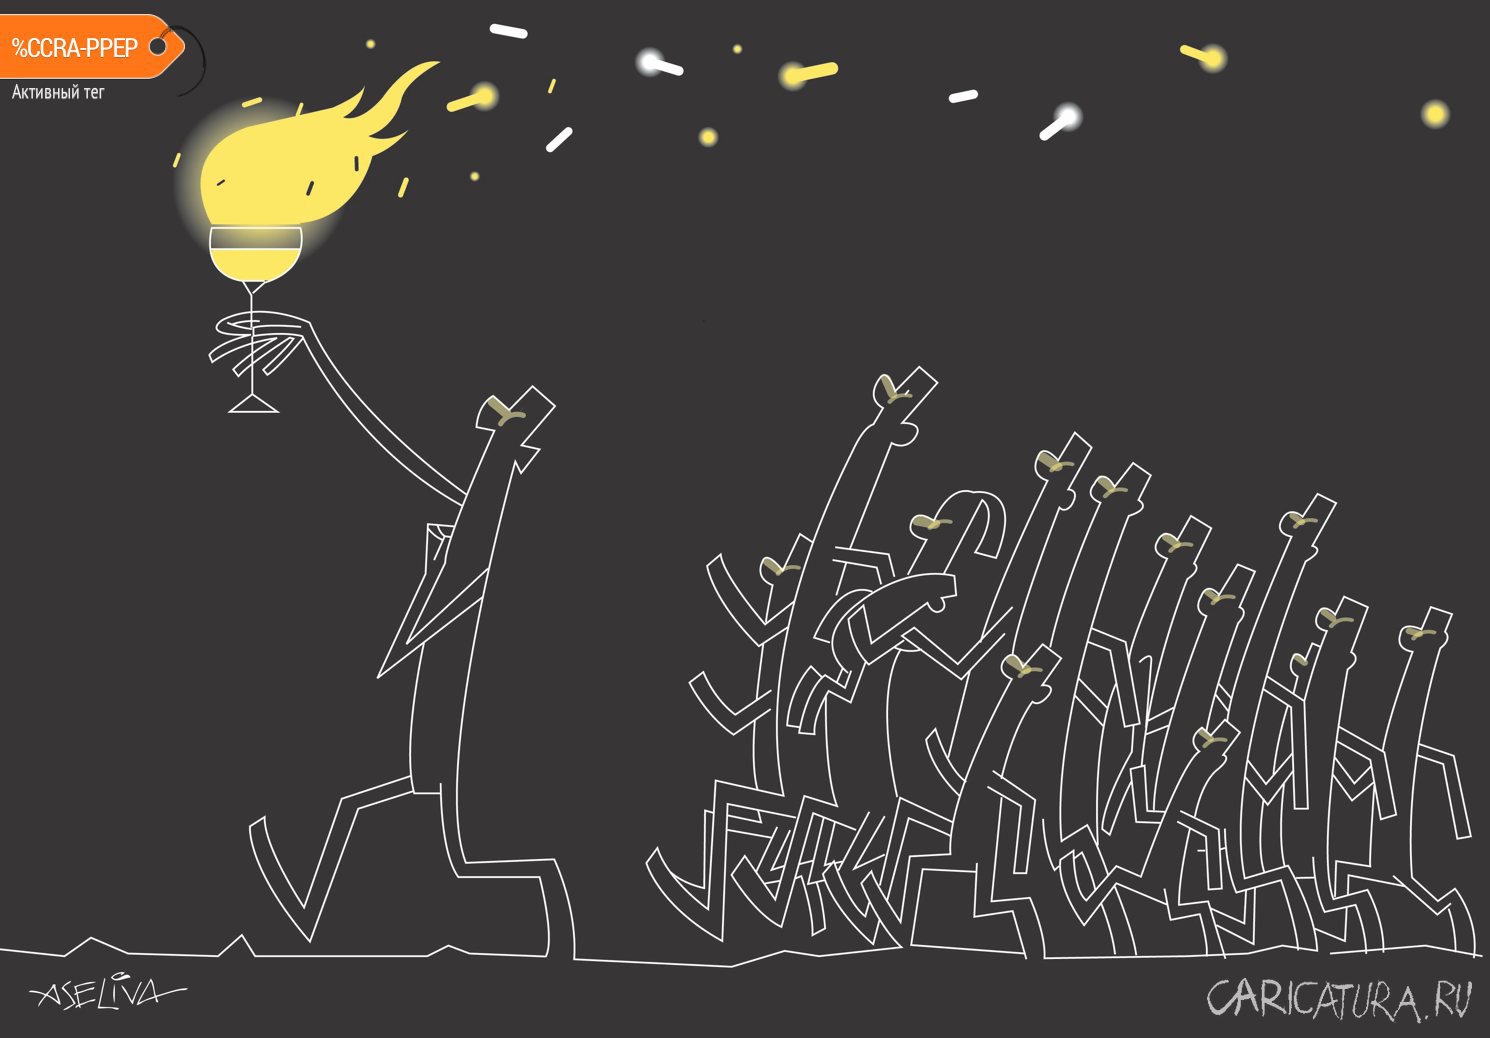 Карикатура "Так победим!", Андрей Селиванов